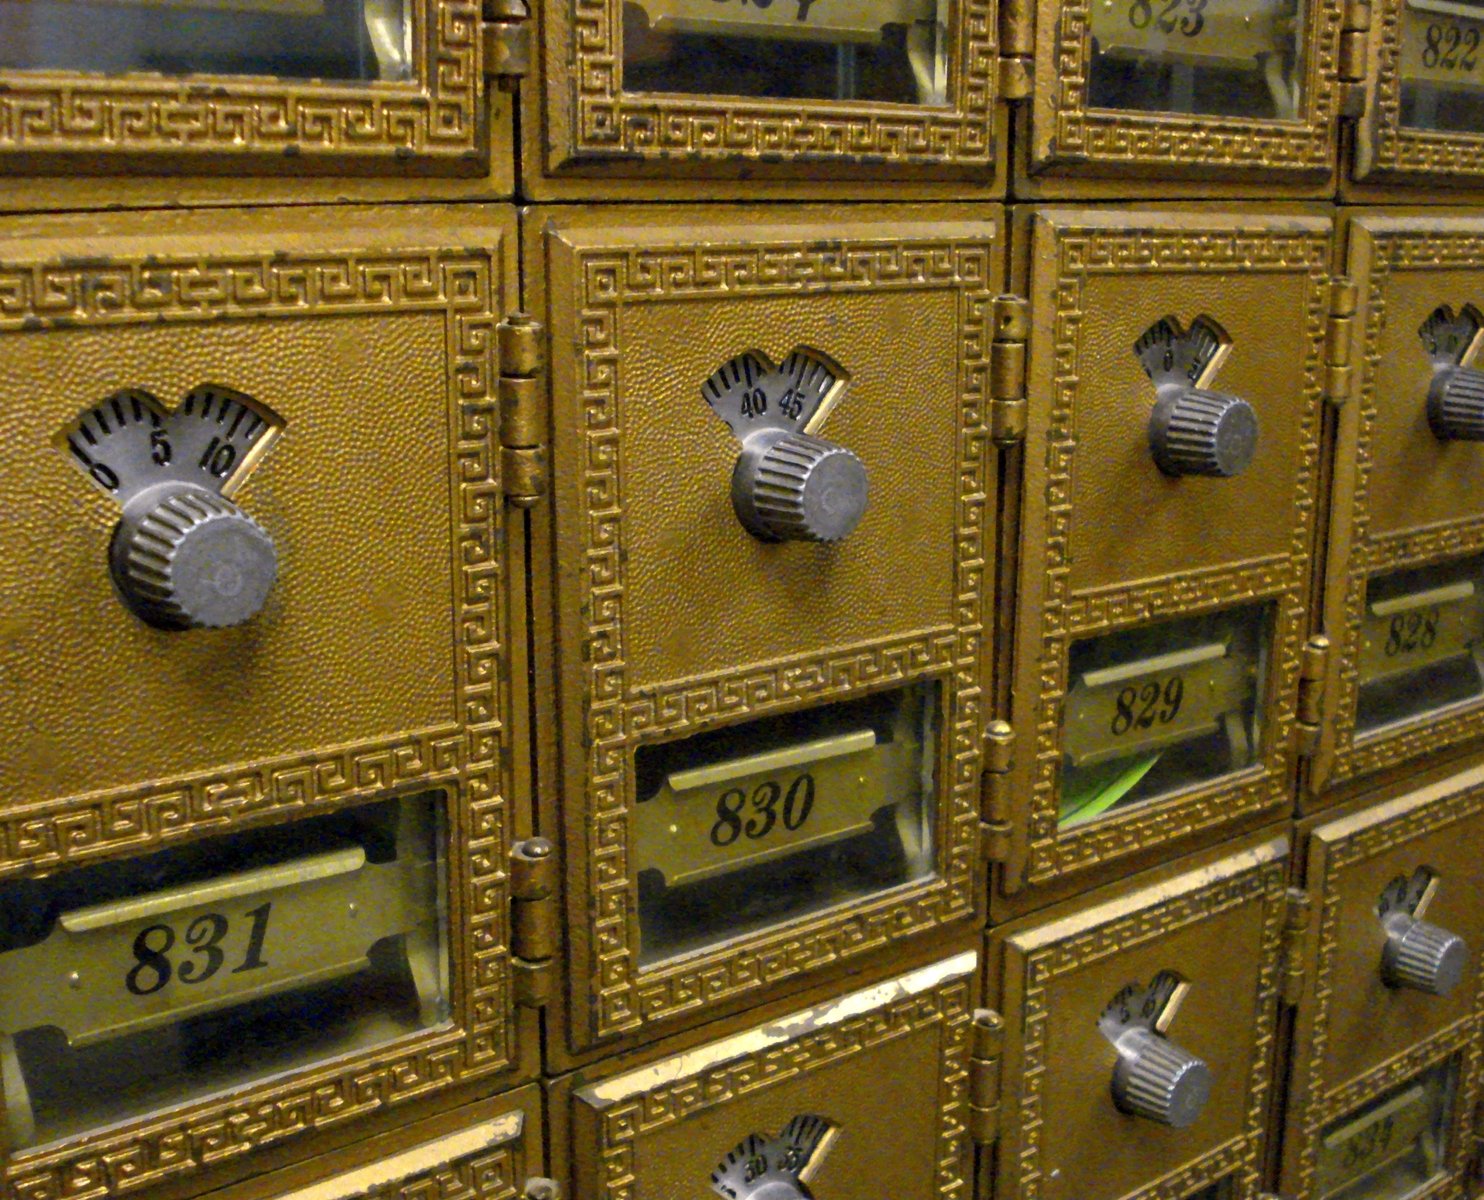 Australia post post office box